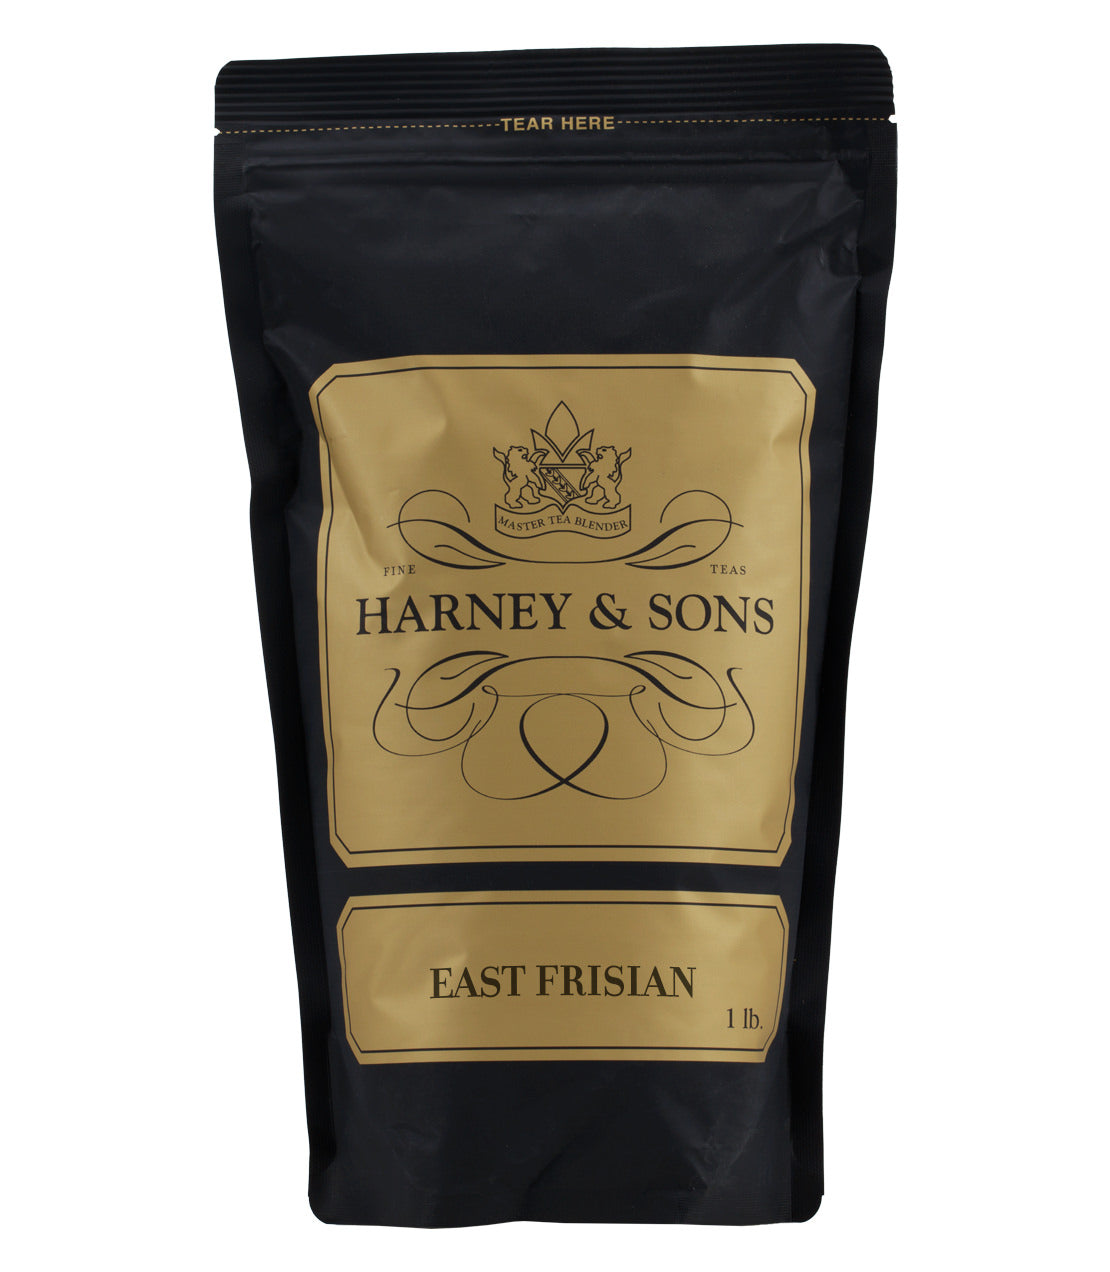 East Frisian - Loose 1 lb. Bag - Harney & Sons Fine Teas